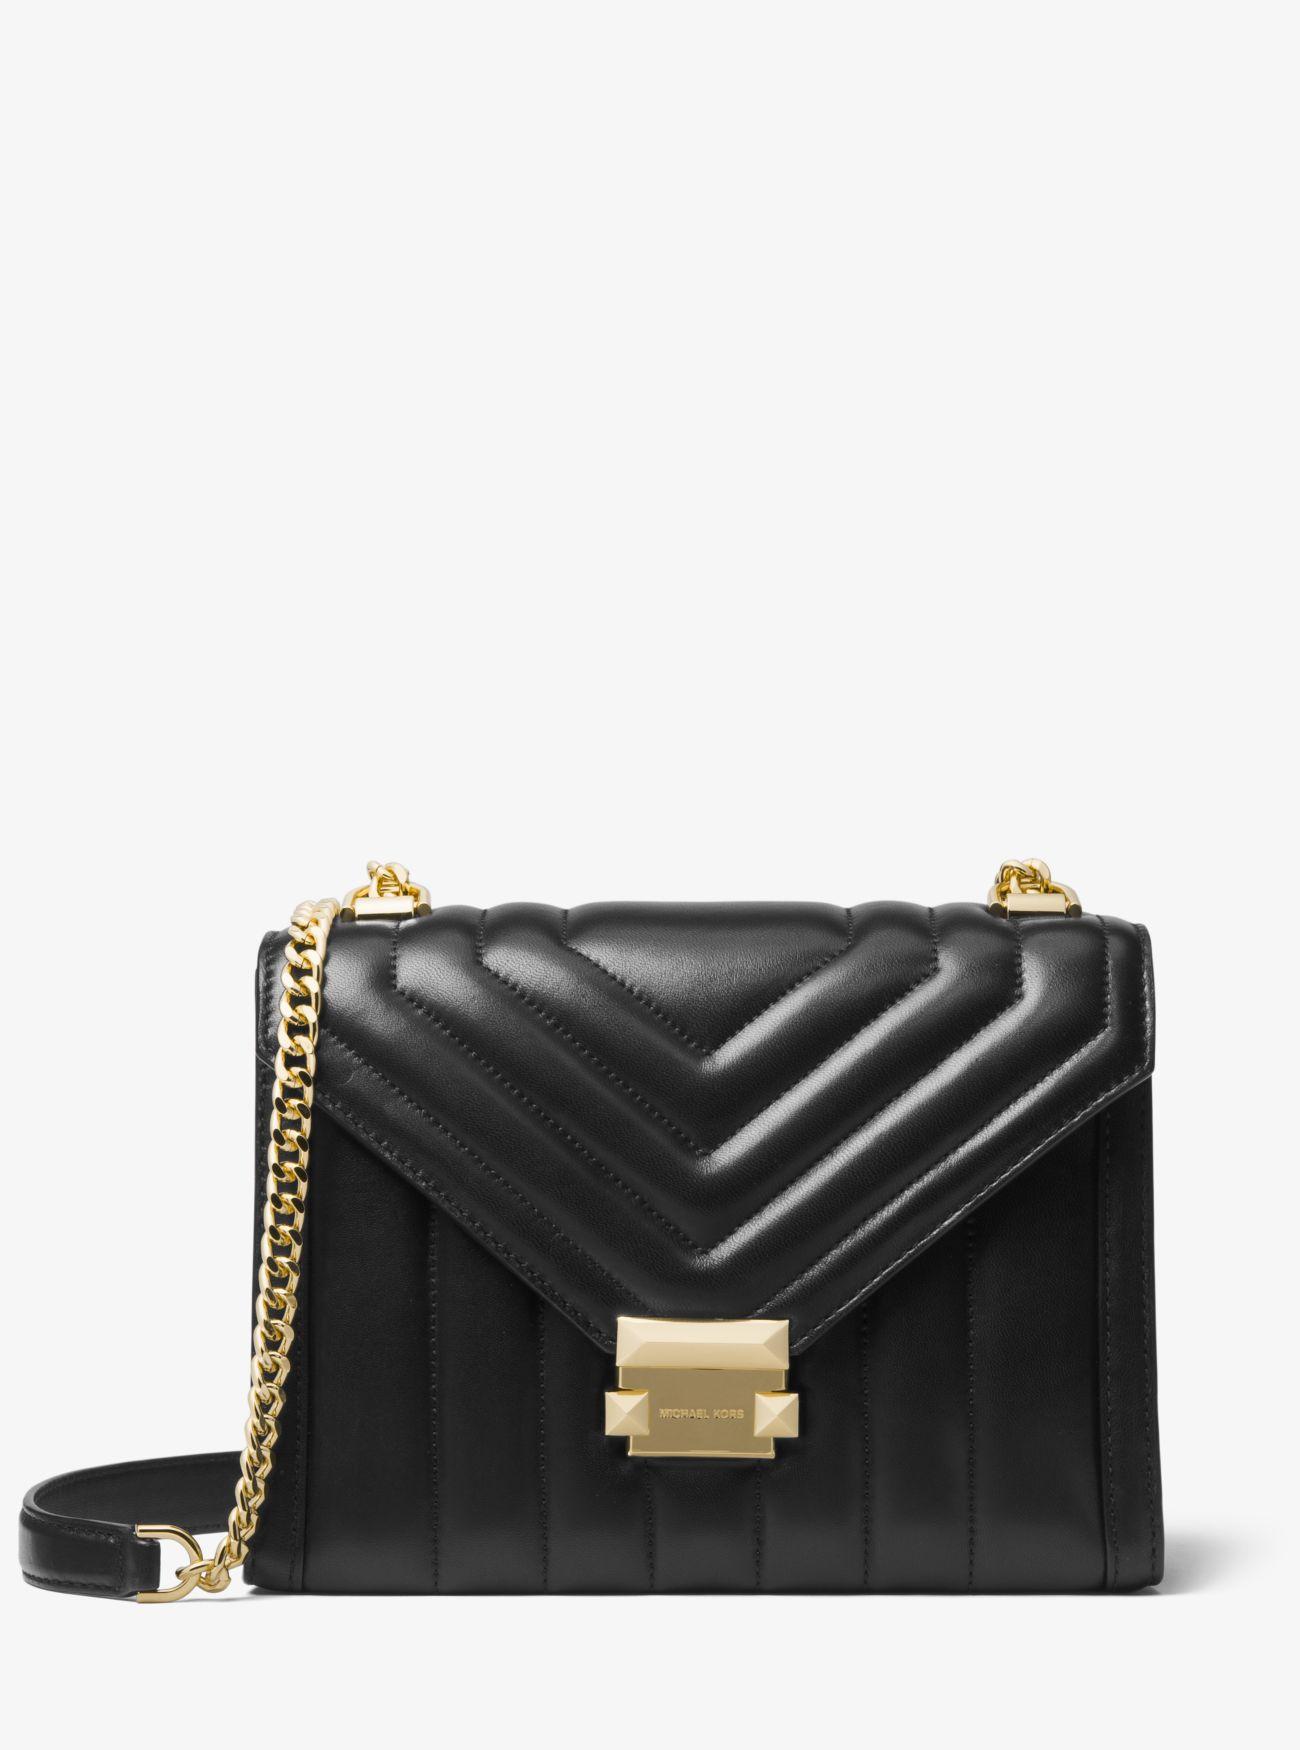 Michael Kors Whitney Large Quilted Leather Shoulder Bag in Black/Gold (Black) - Save 58% - Lyst